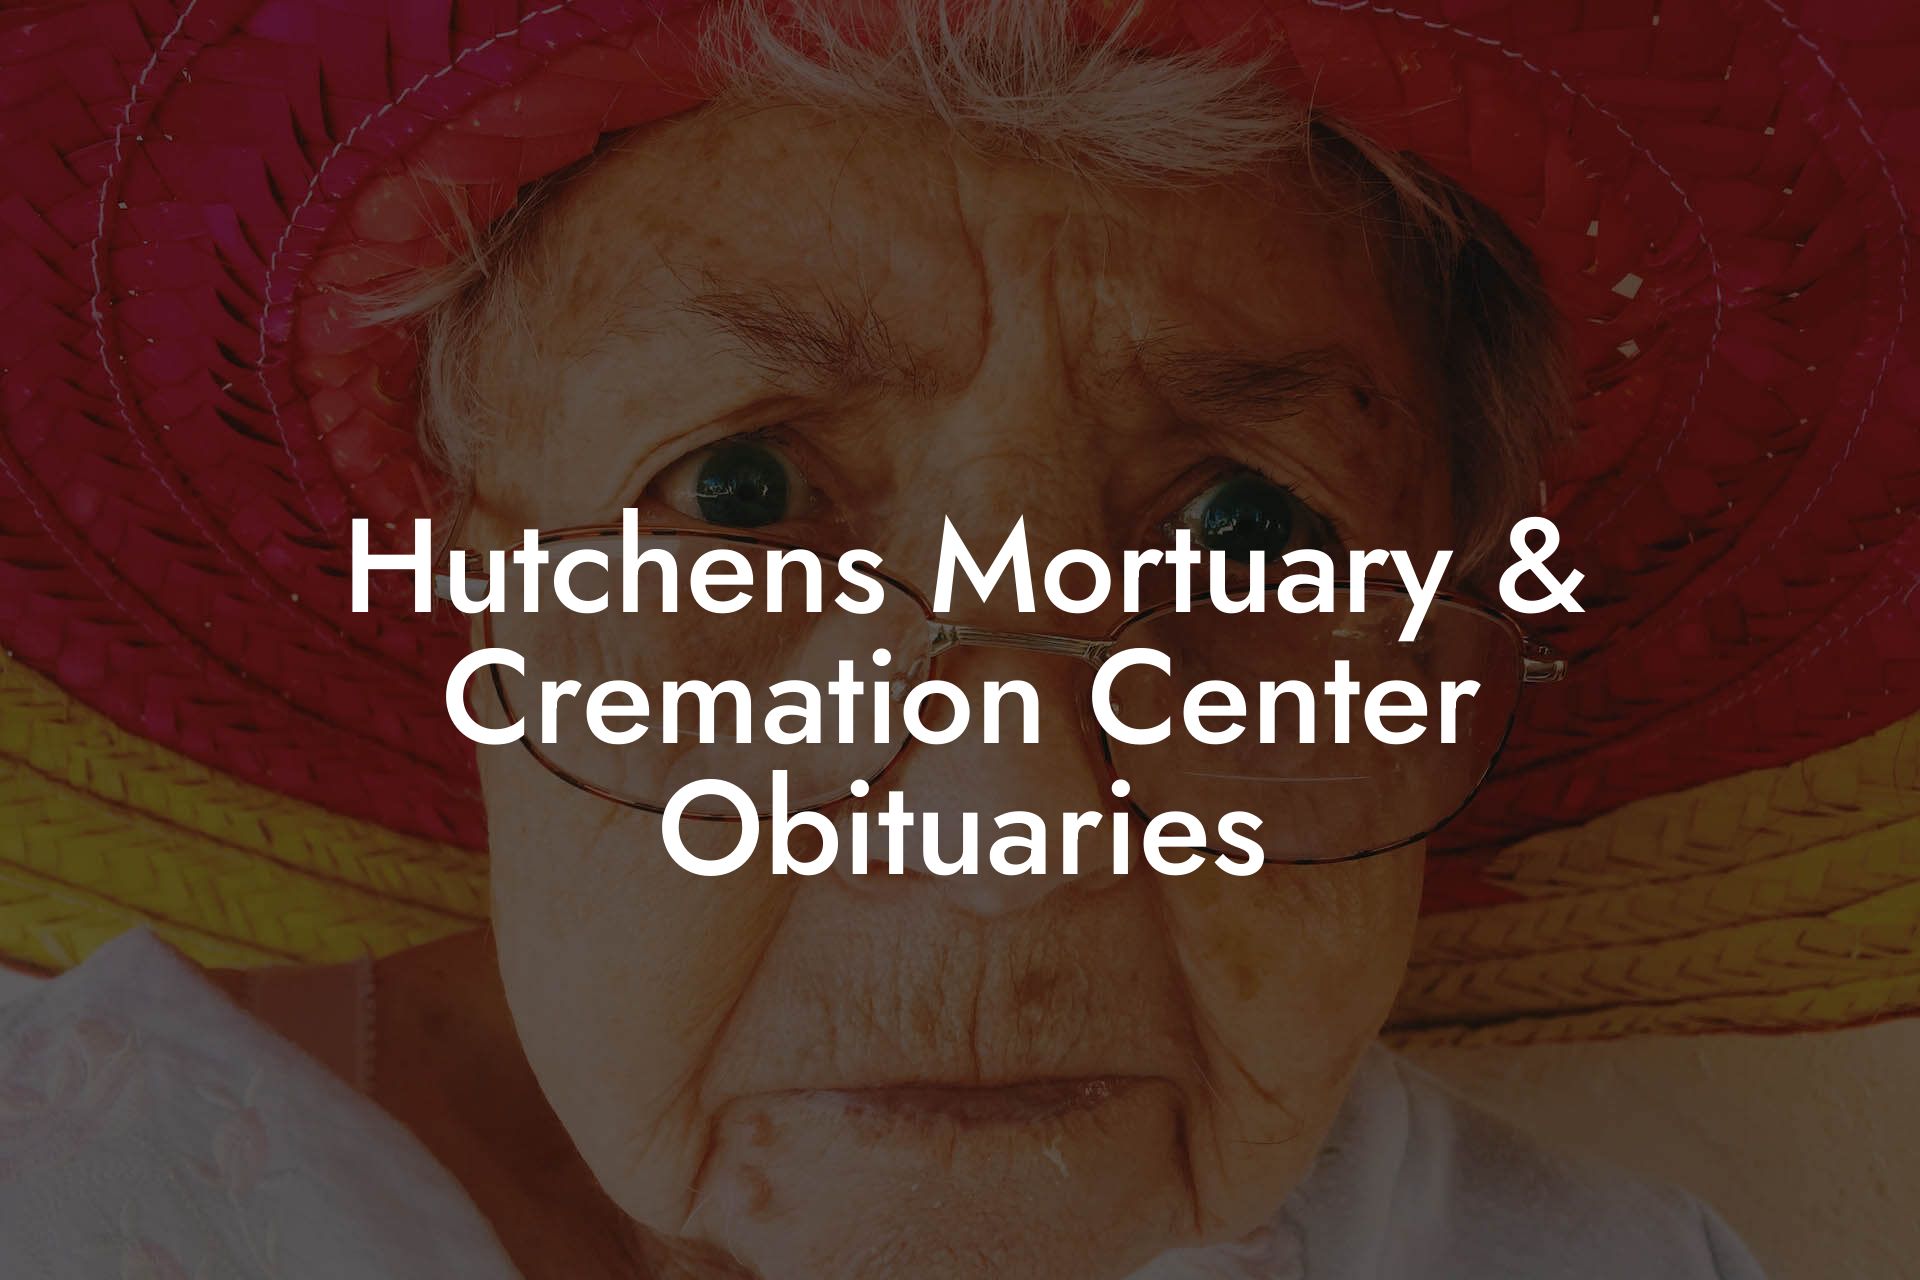 Hutchens Mortuary & Cremation Center Obituaries